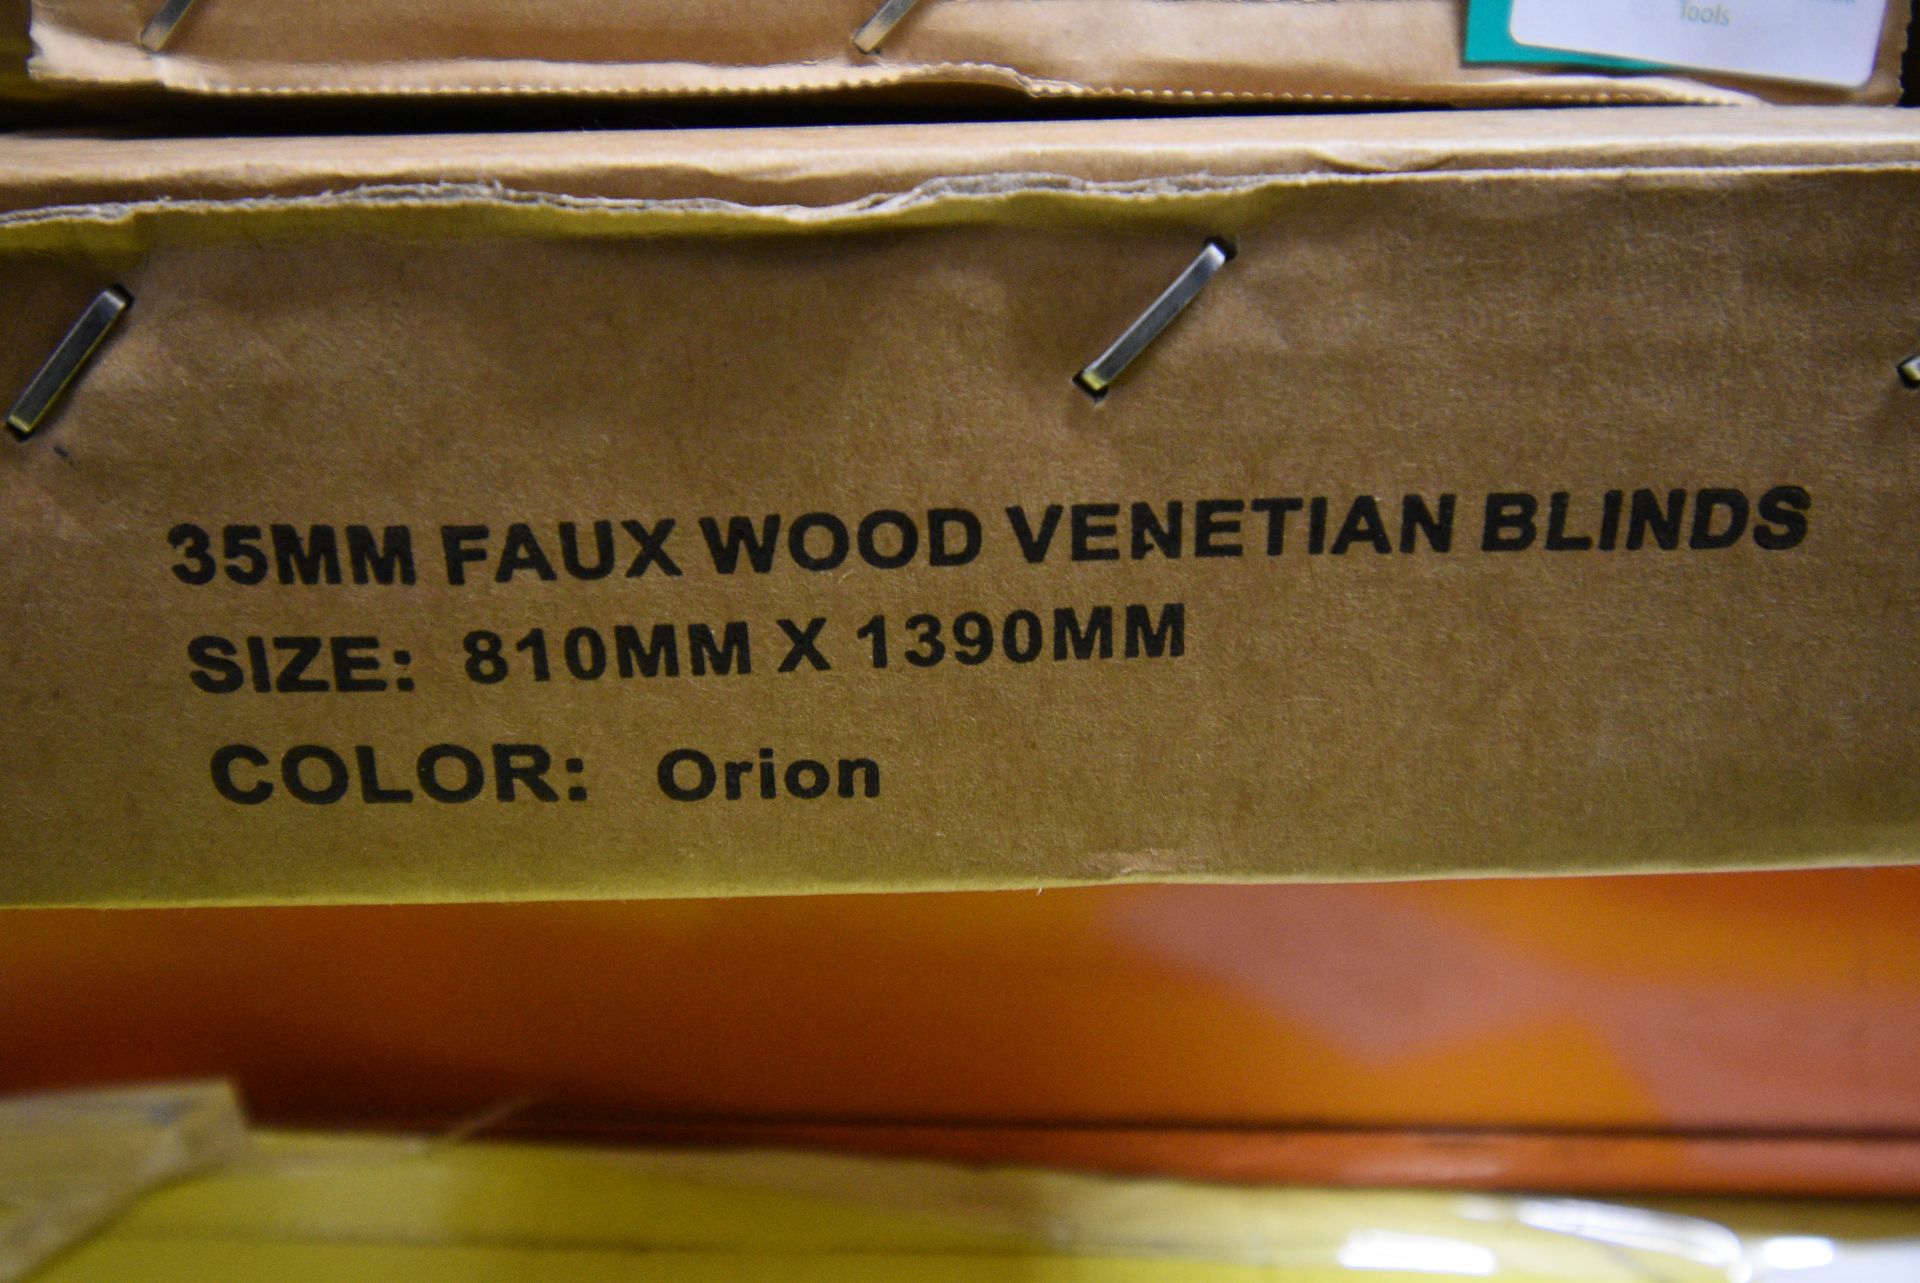 *Two 35mm Faux Wood Venetian Blinds 81x139cm (as n - Image 2 of 2